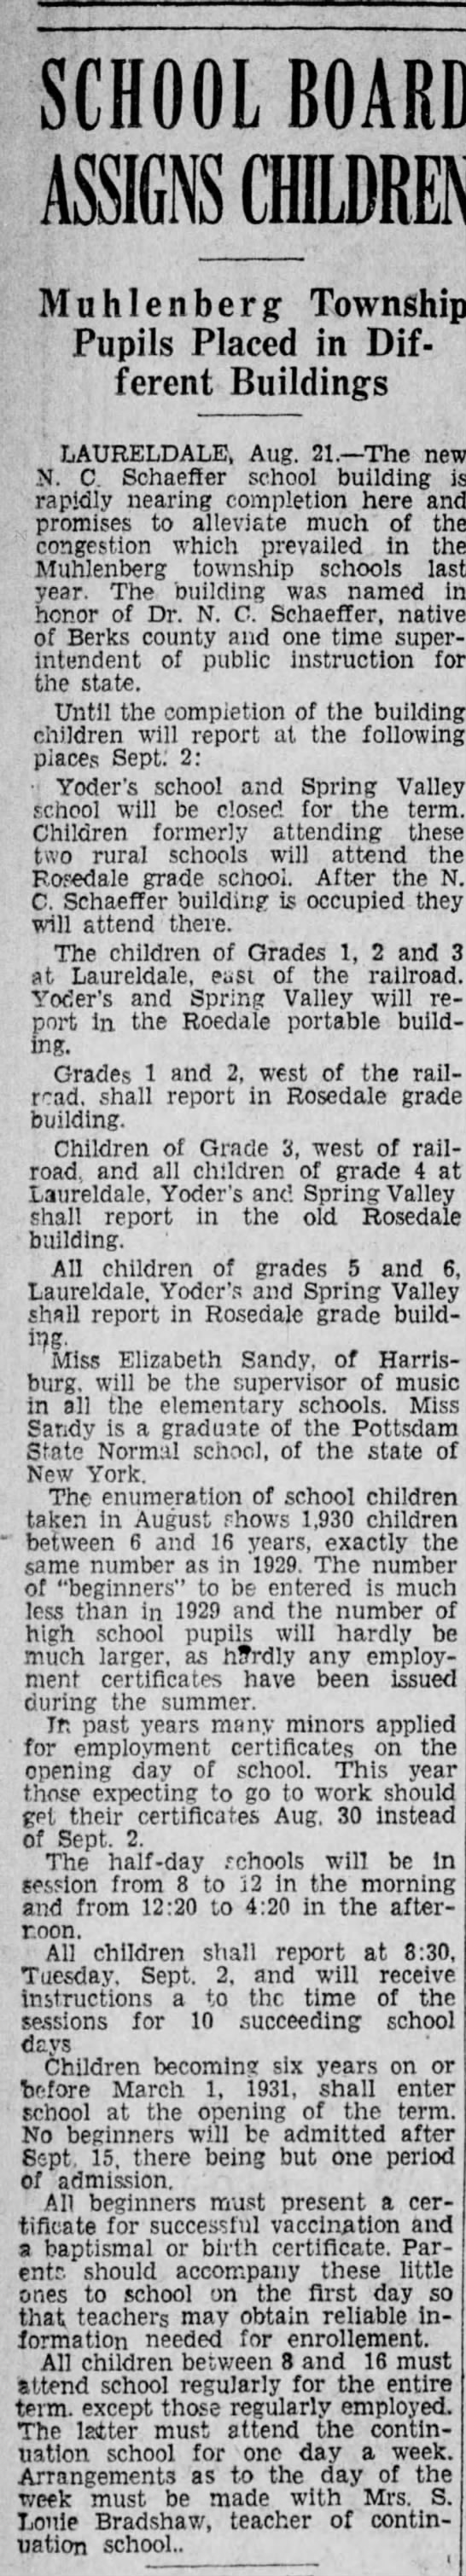 New N C Schaeffer school assignments 22 Aug 1930 - 